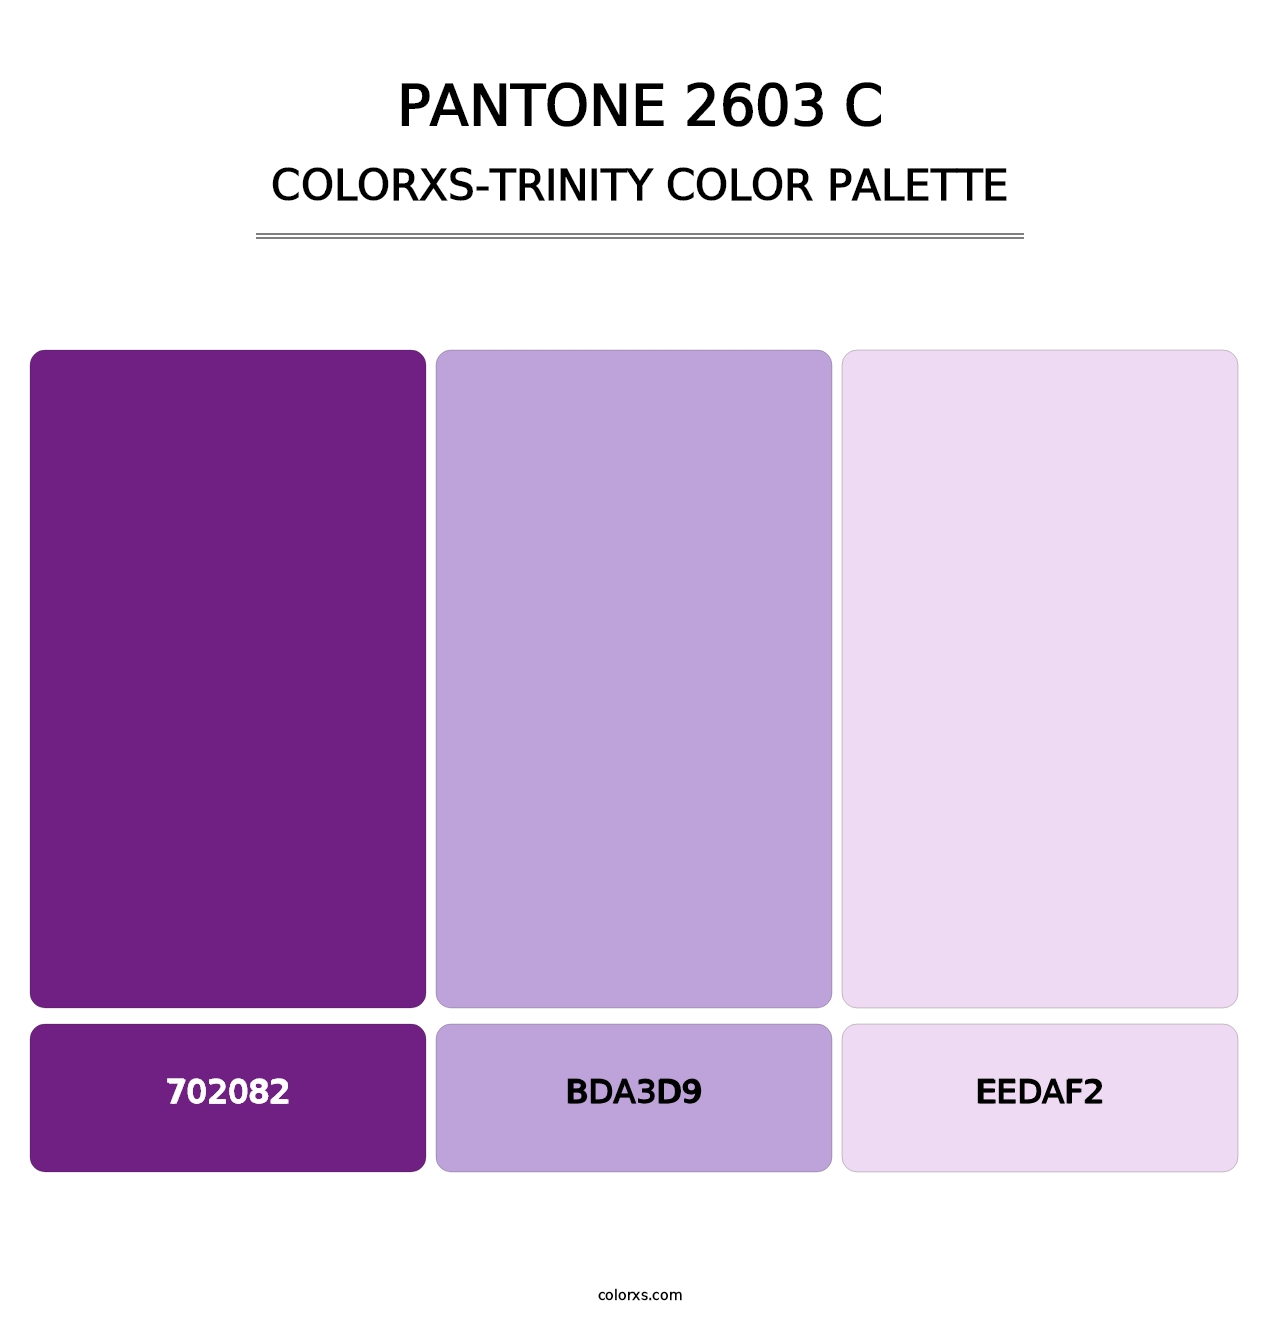 PANTONE 2603 C - Colorxs Trinity Palette